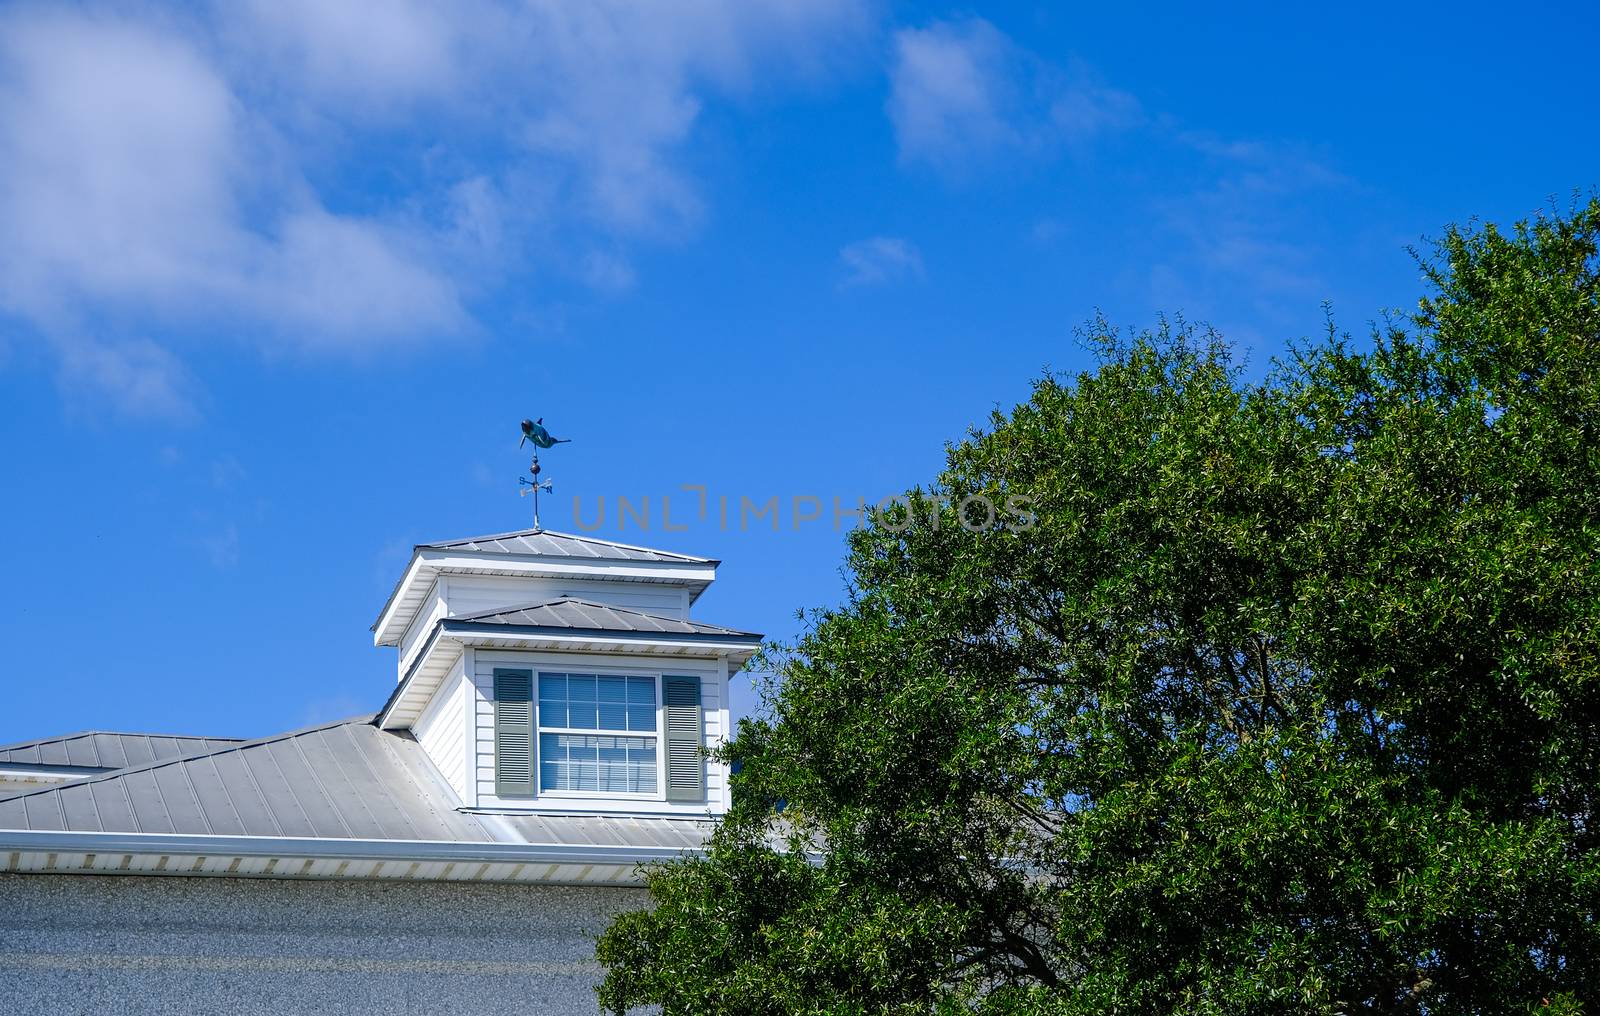 Roof Dormer with Wind Vane on Metal Roof